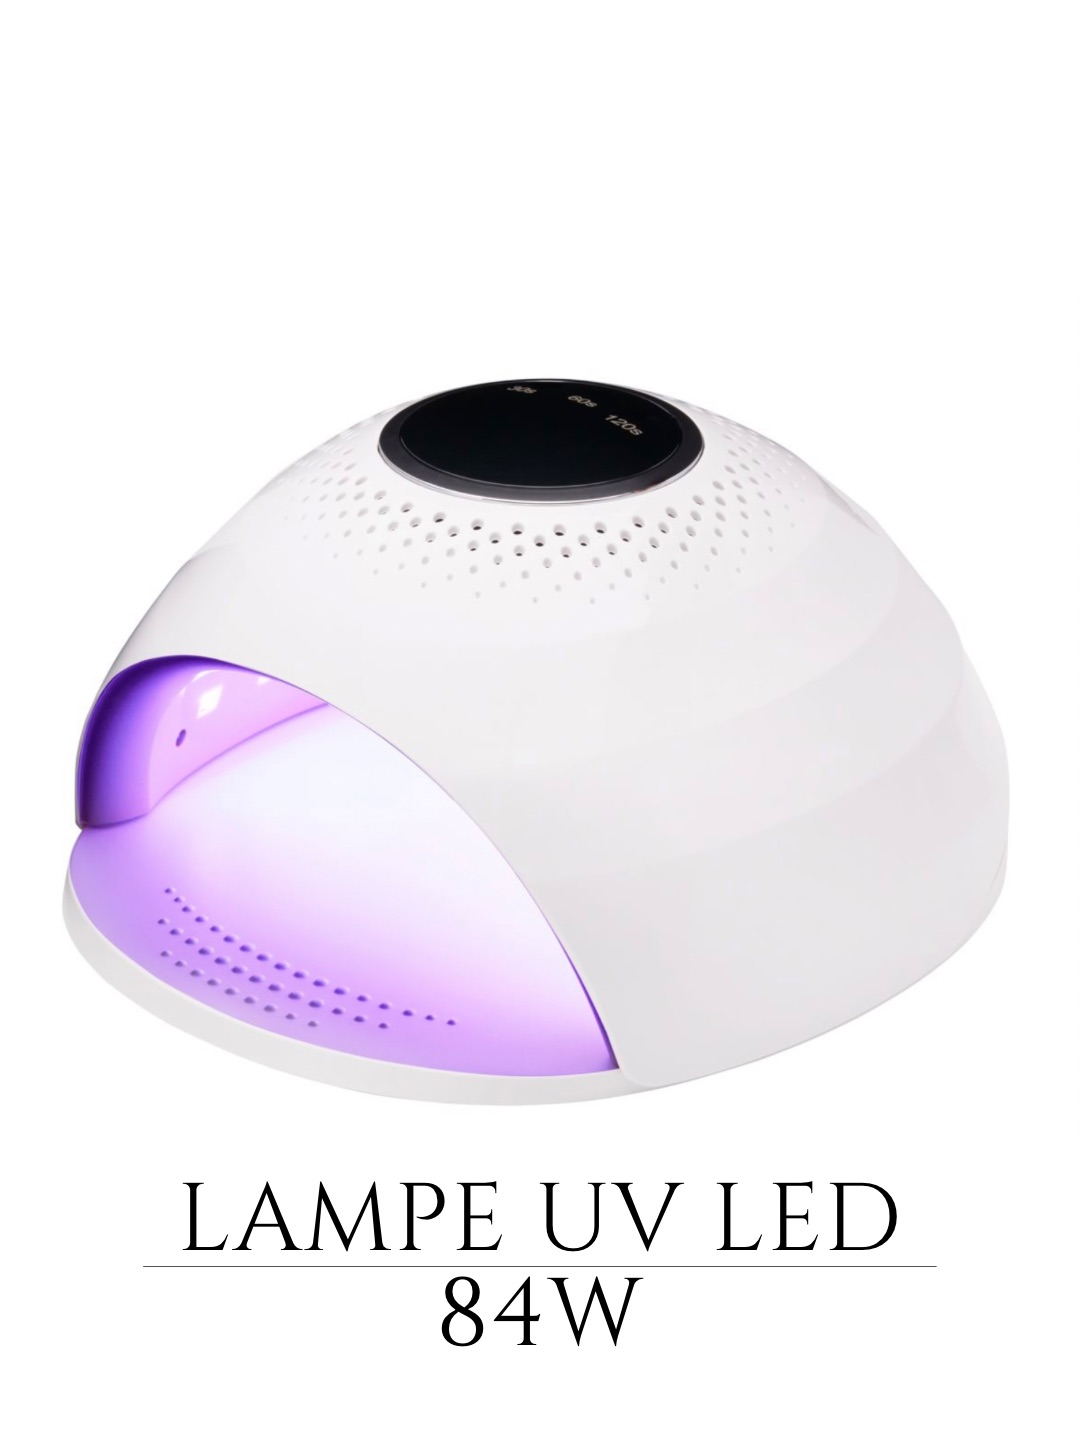 Lampe UV LED 84w